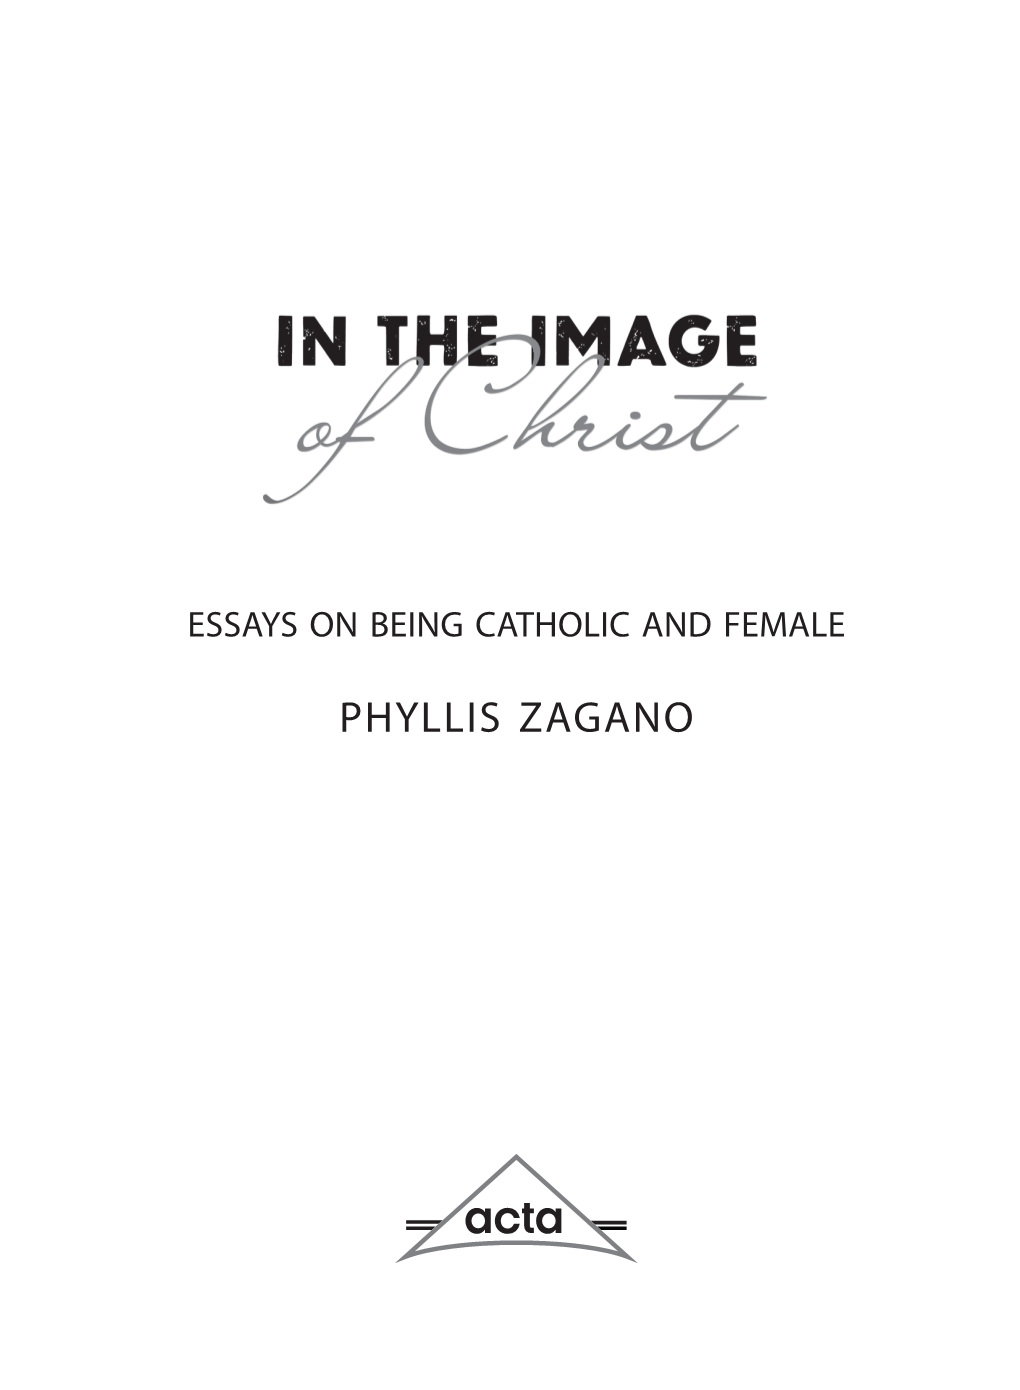 Phyllis Zagano Contents